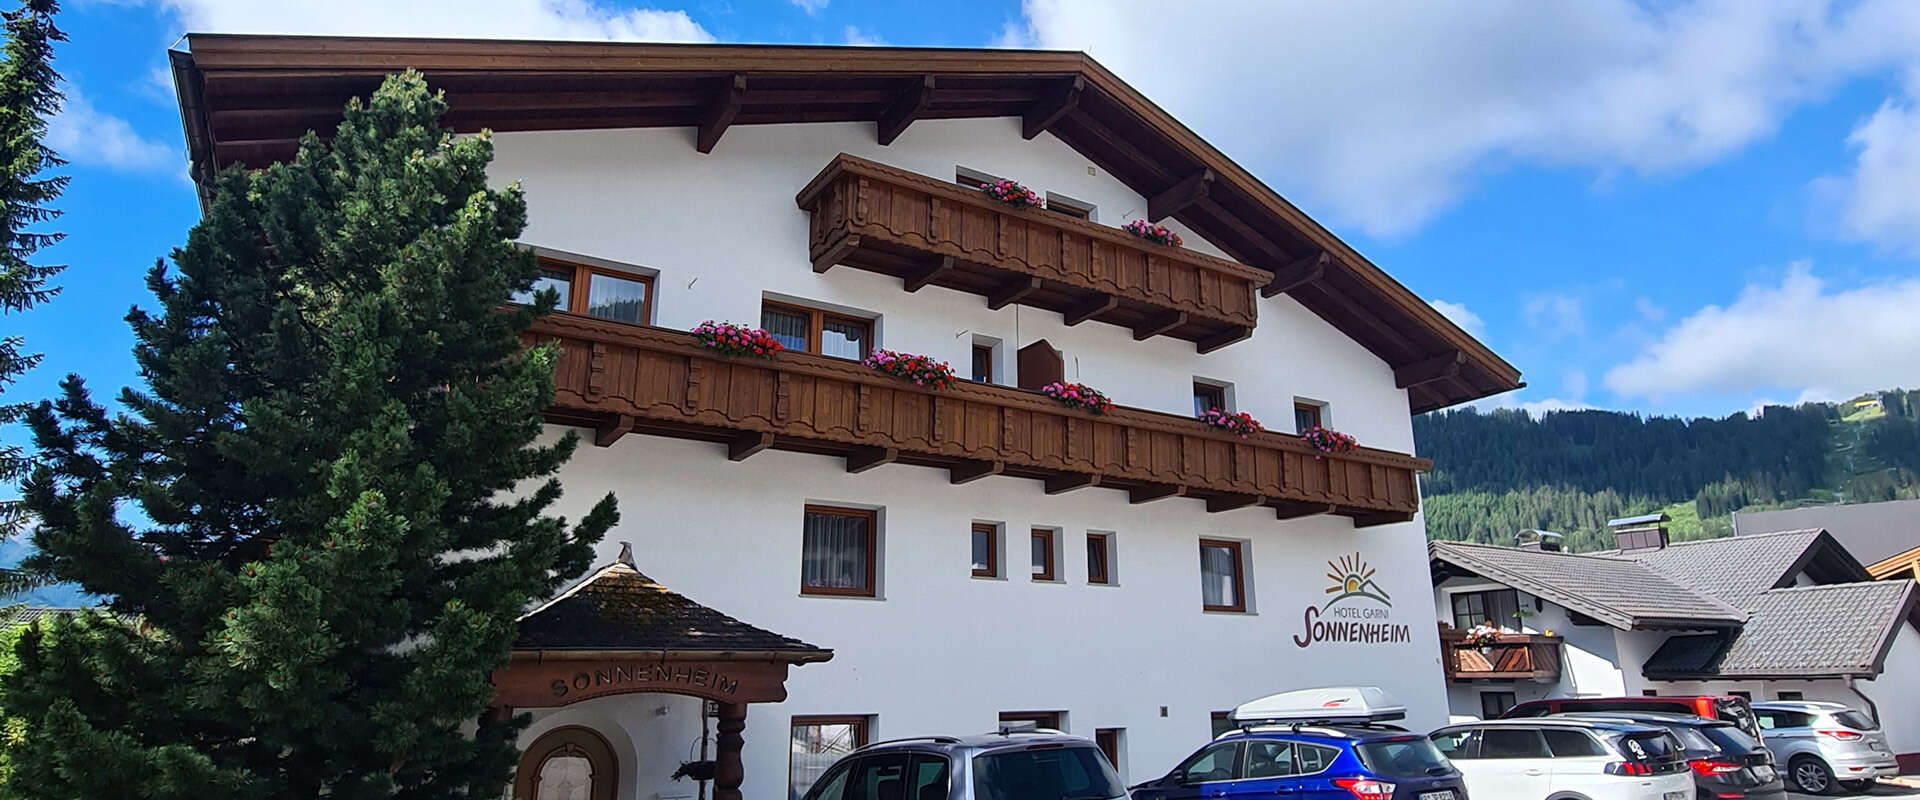 Hotel Garni Sonnenheim in Fiss Tyrol